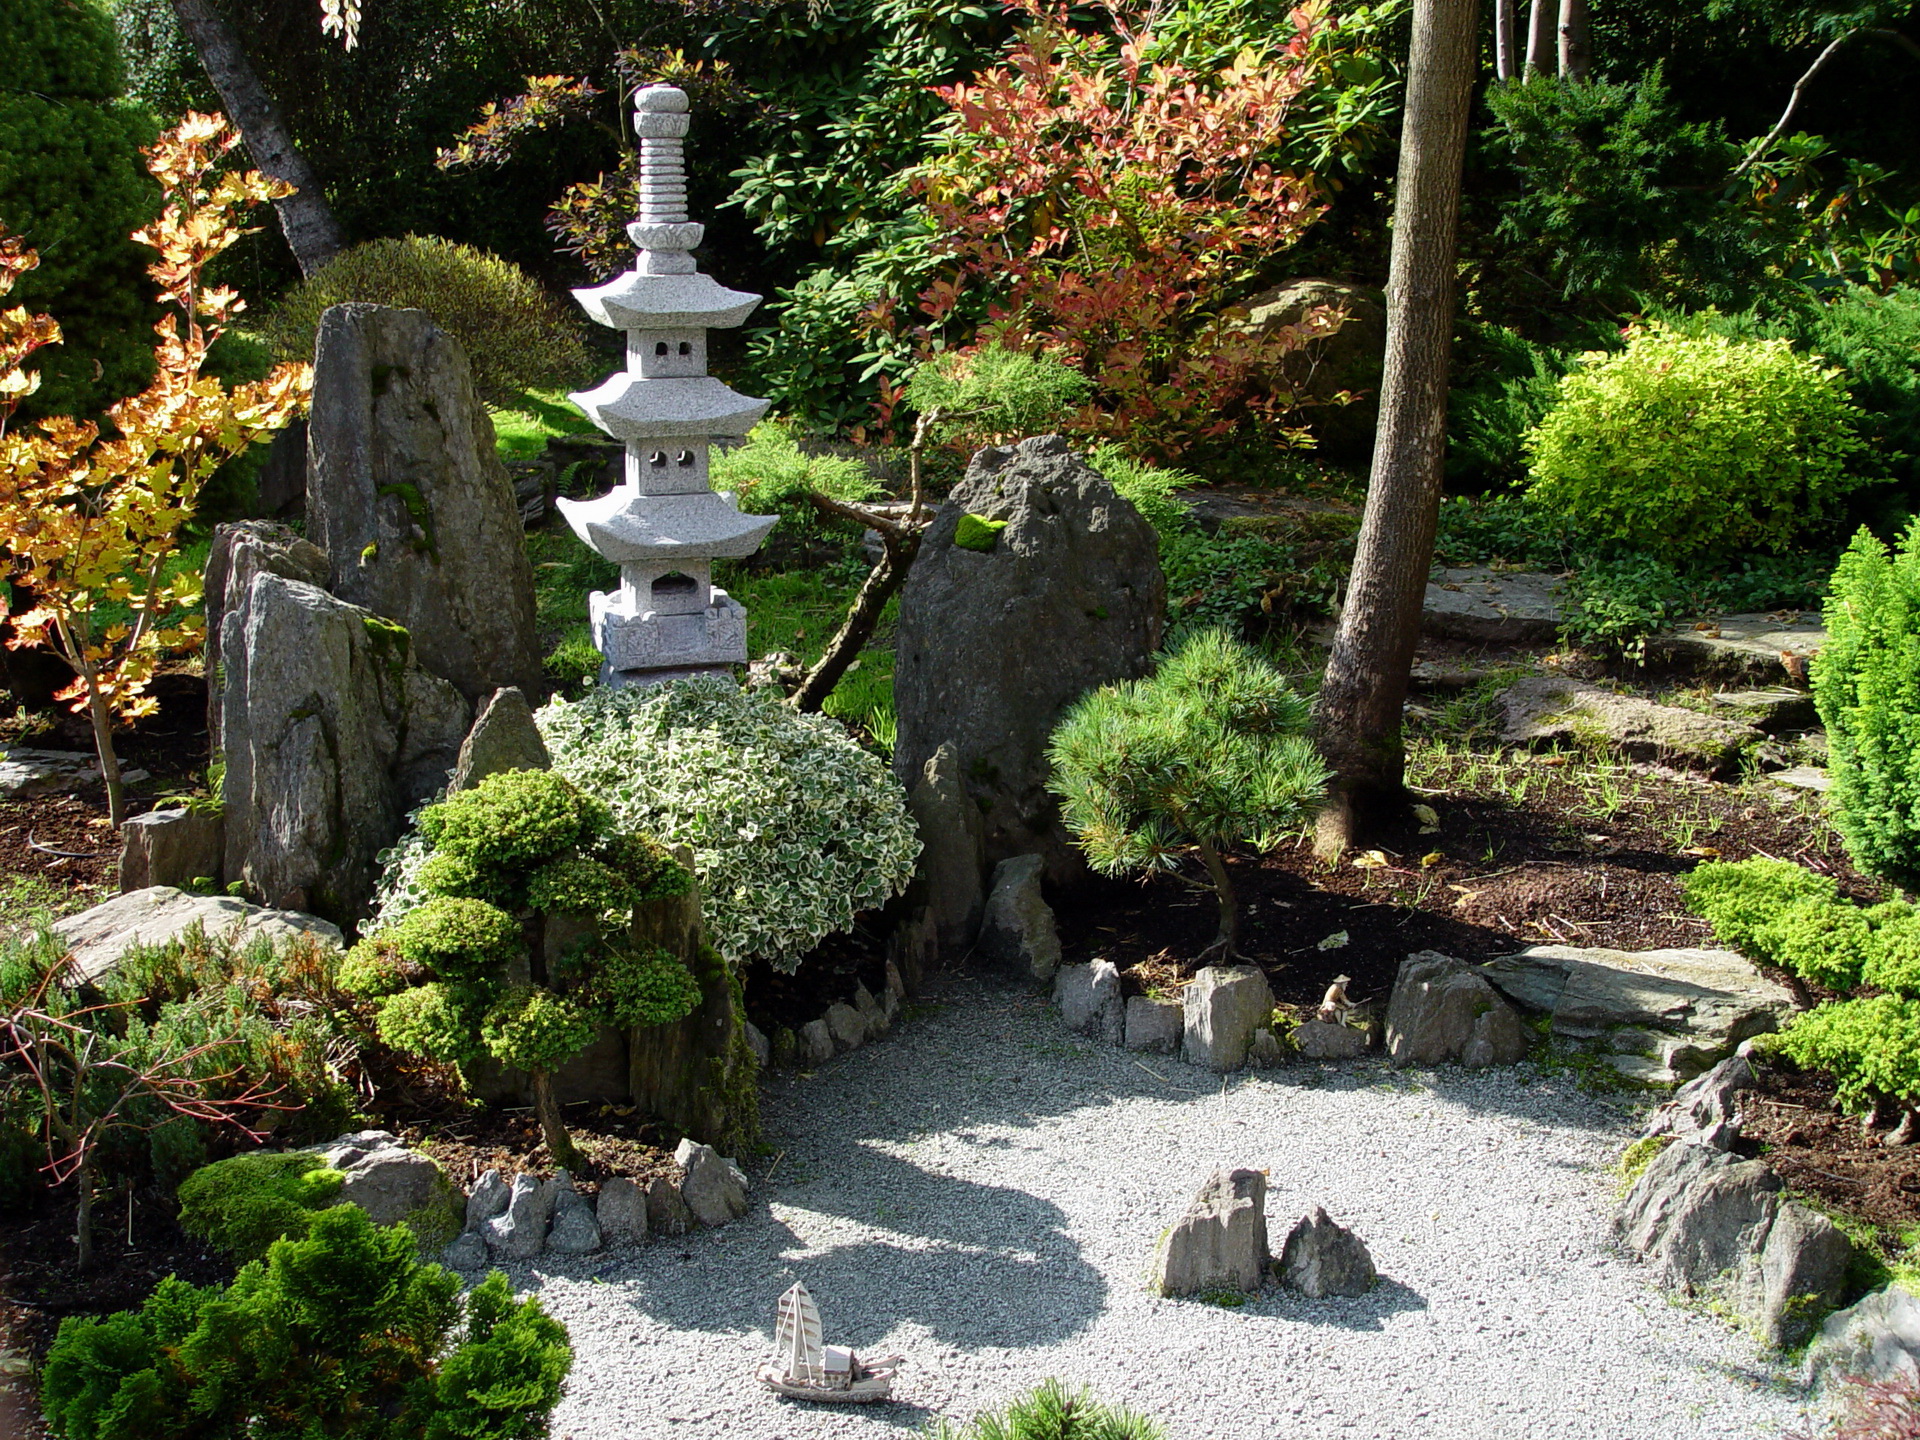 сад в японском стиле своими руками фото